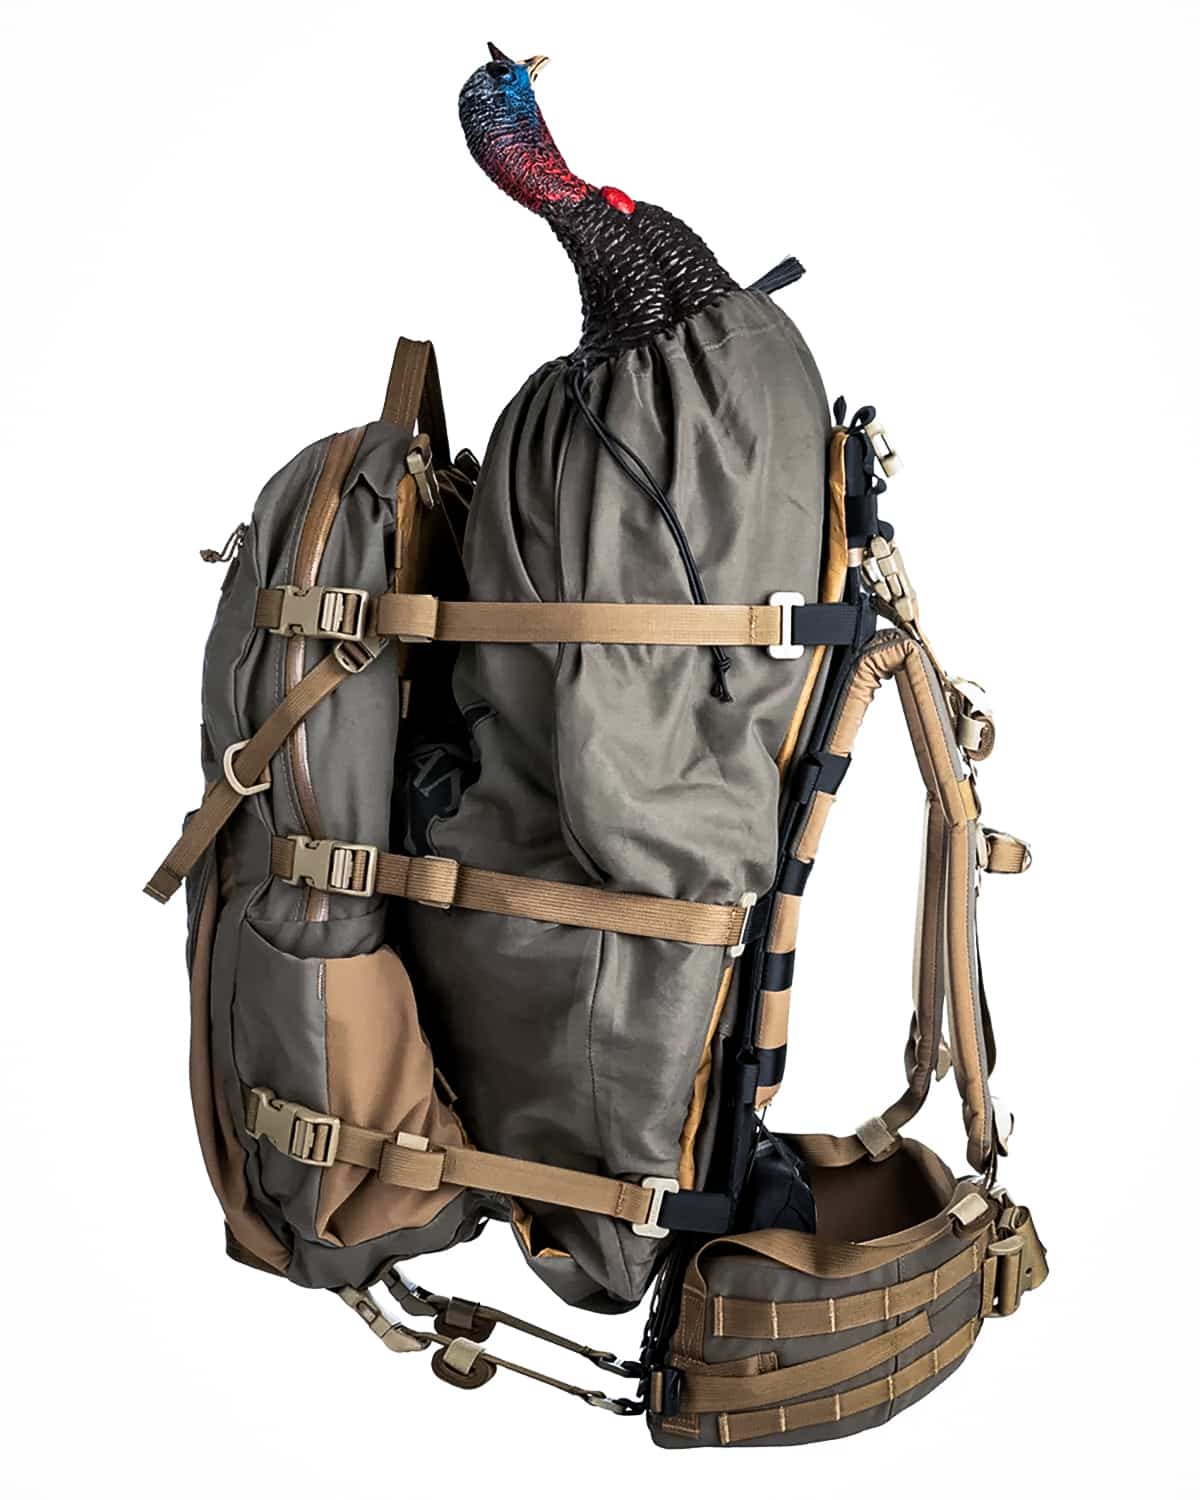 pronghorn antelope backpack